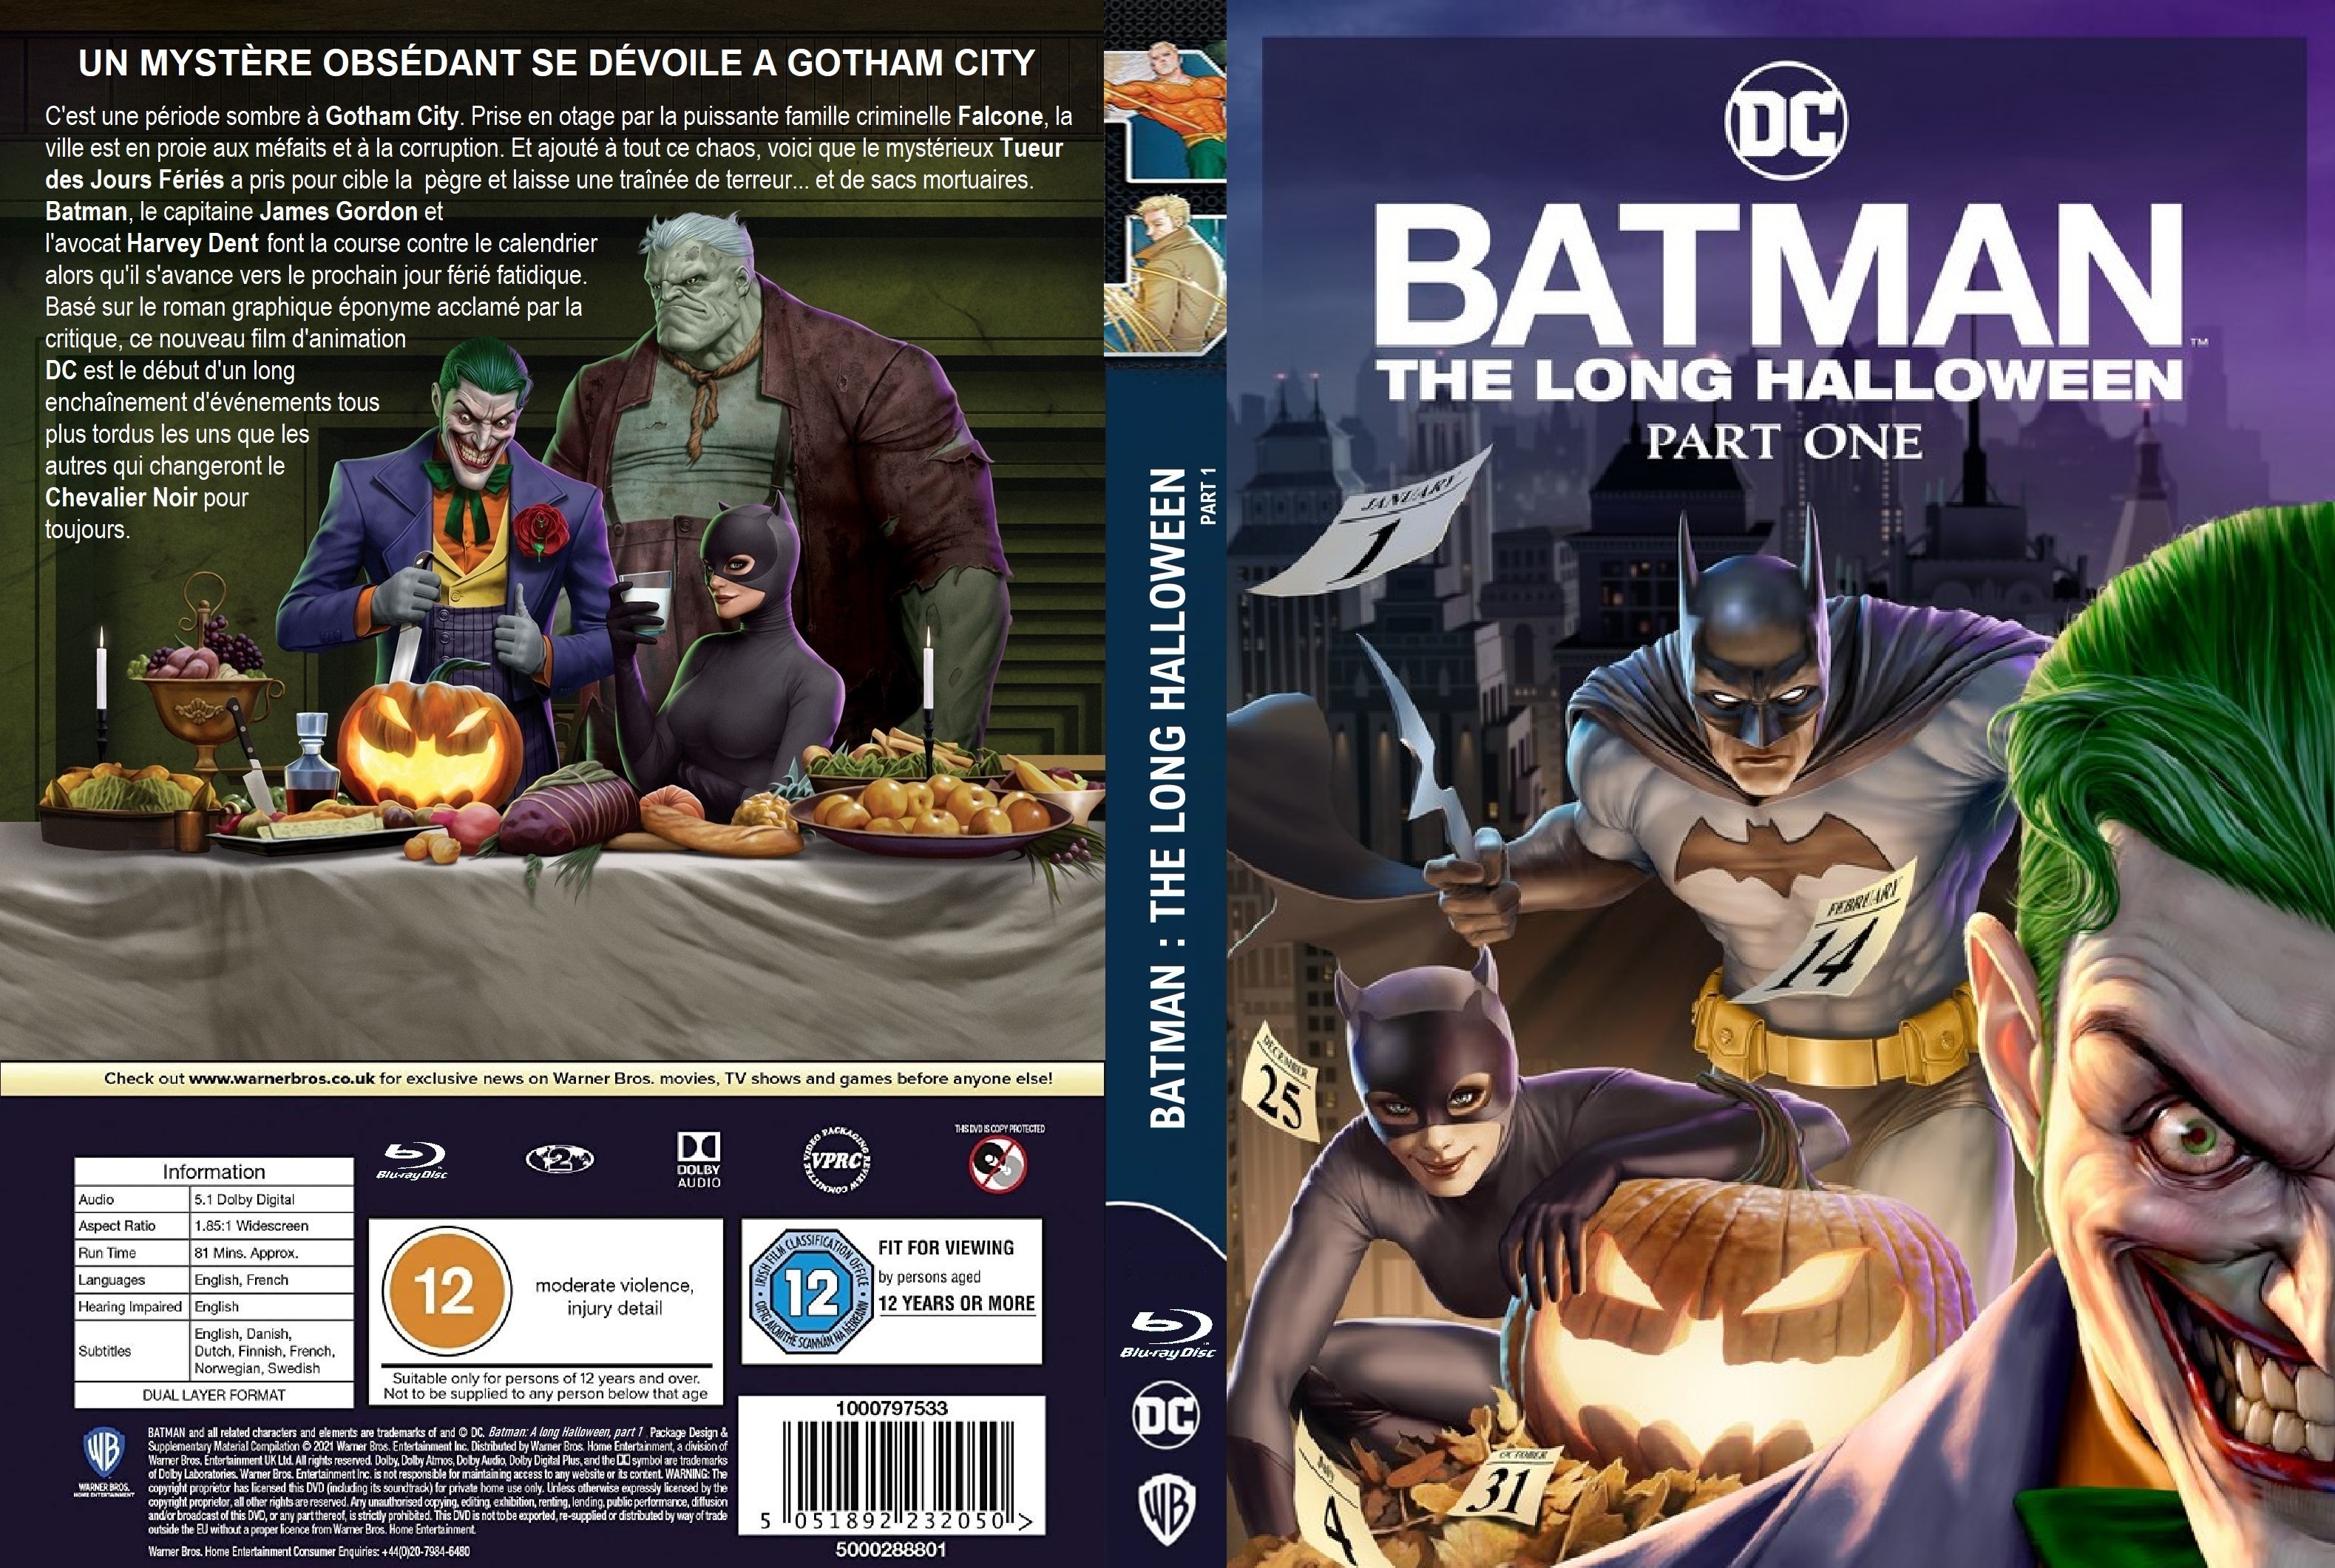 Jaquette DVD Batman The Long Halloween partie 1 custom